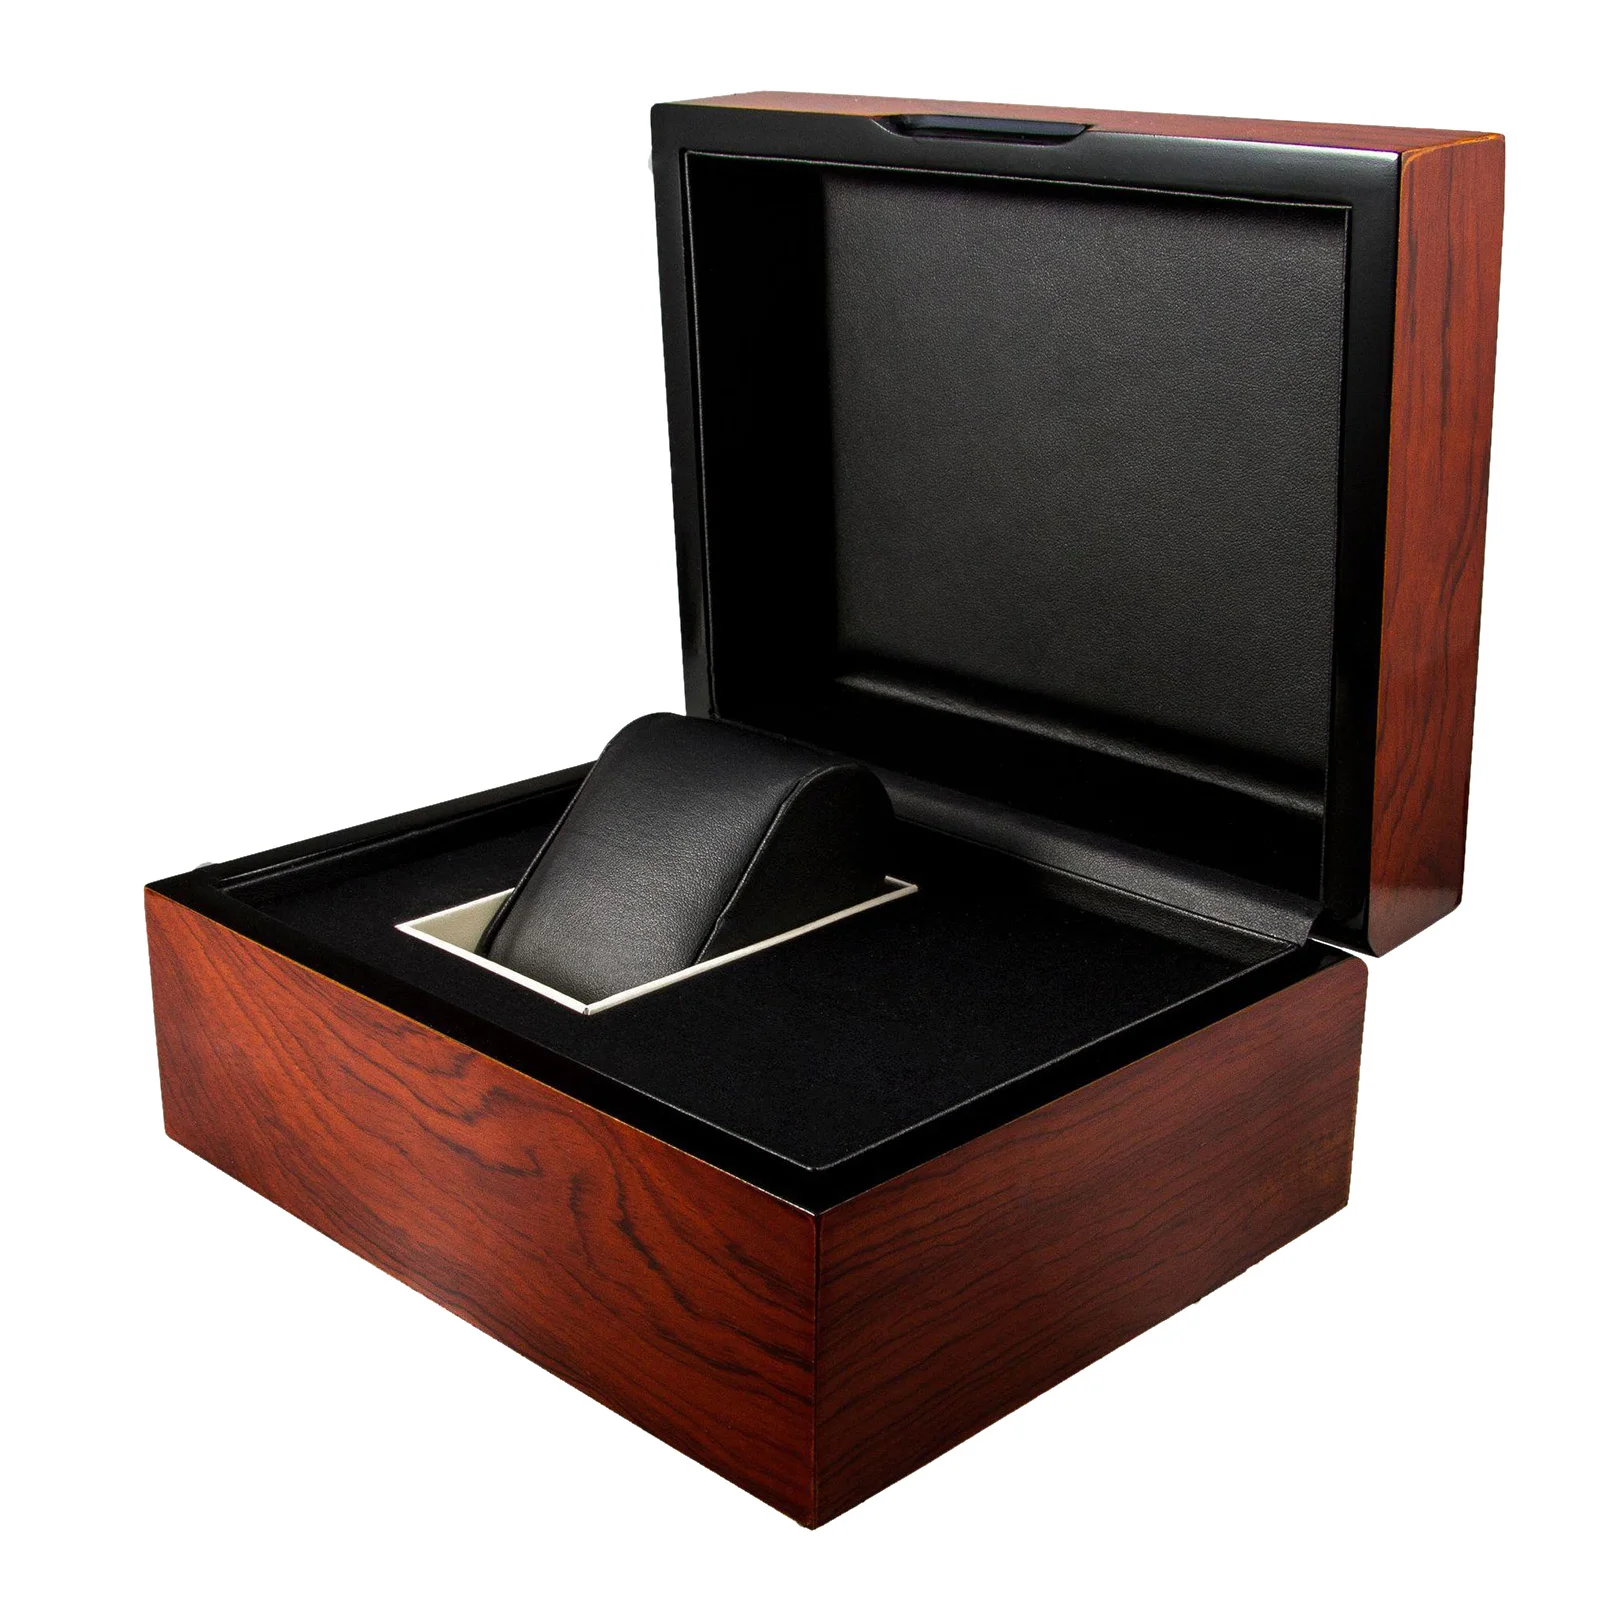 Luxury 1 Grid Wrist Watch Case Jewelry Display Box Storage Holder